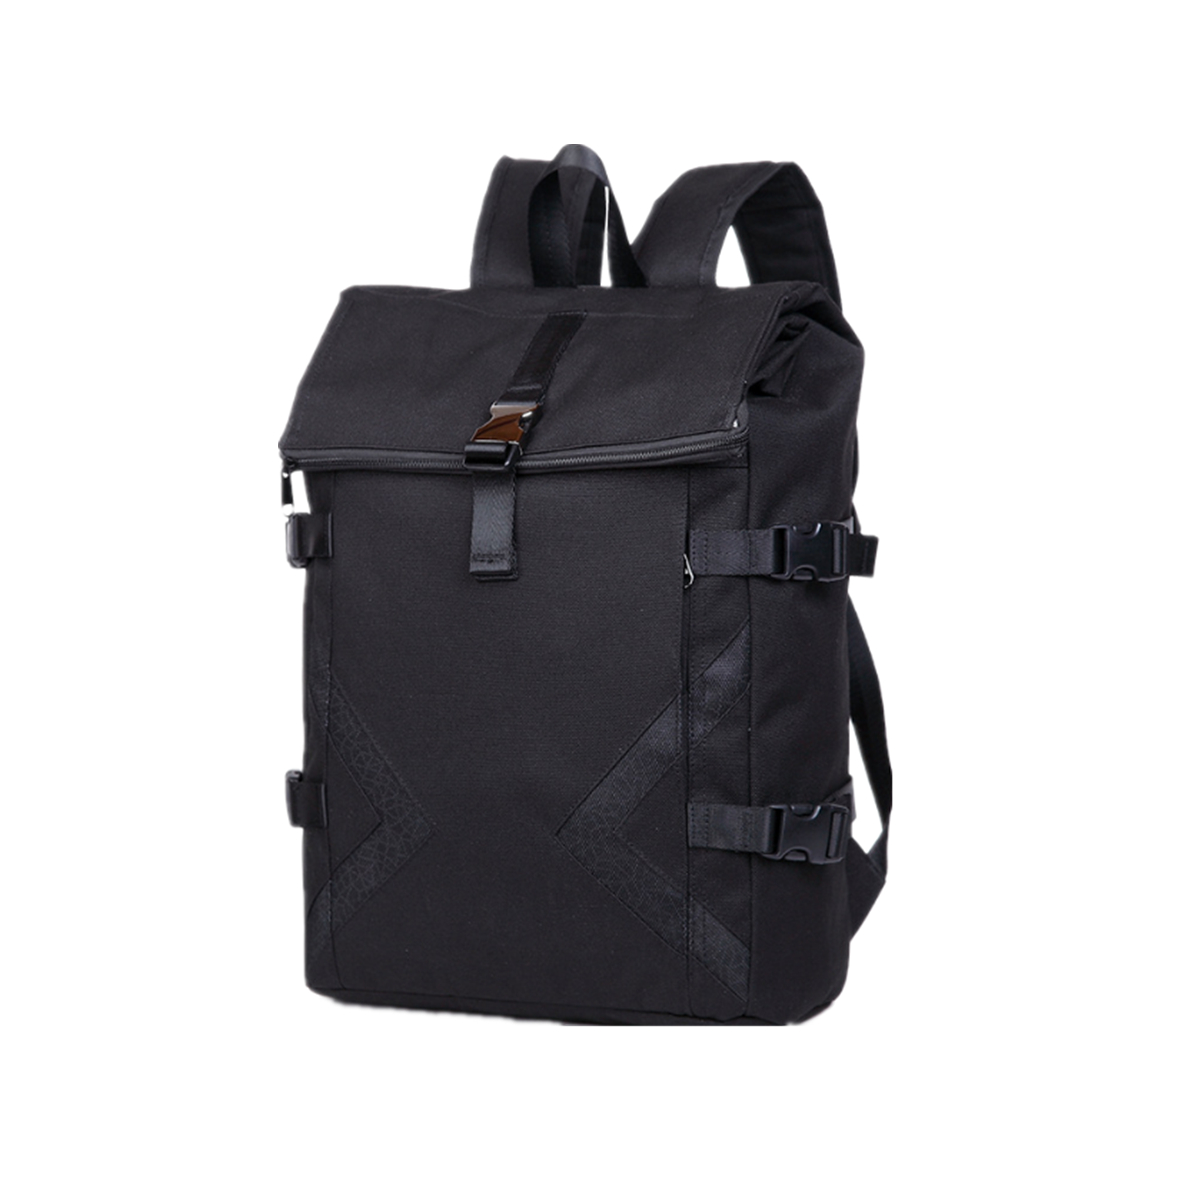 

Luminous Laptop Bag Backpack Travel Bag With External USB Charging Port